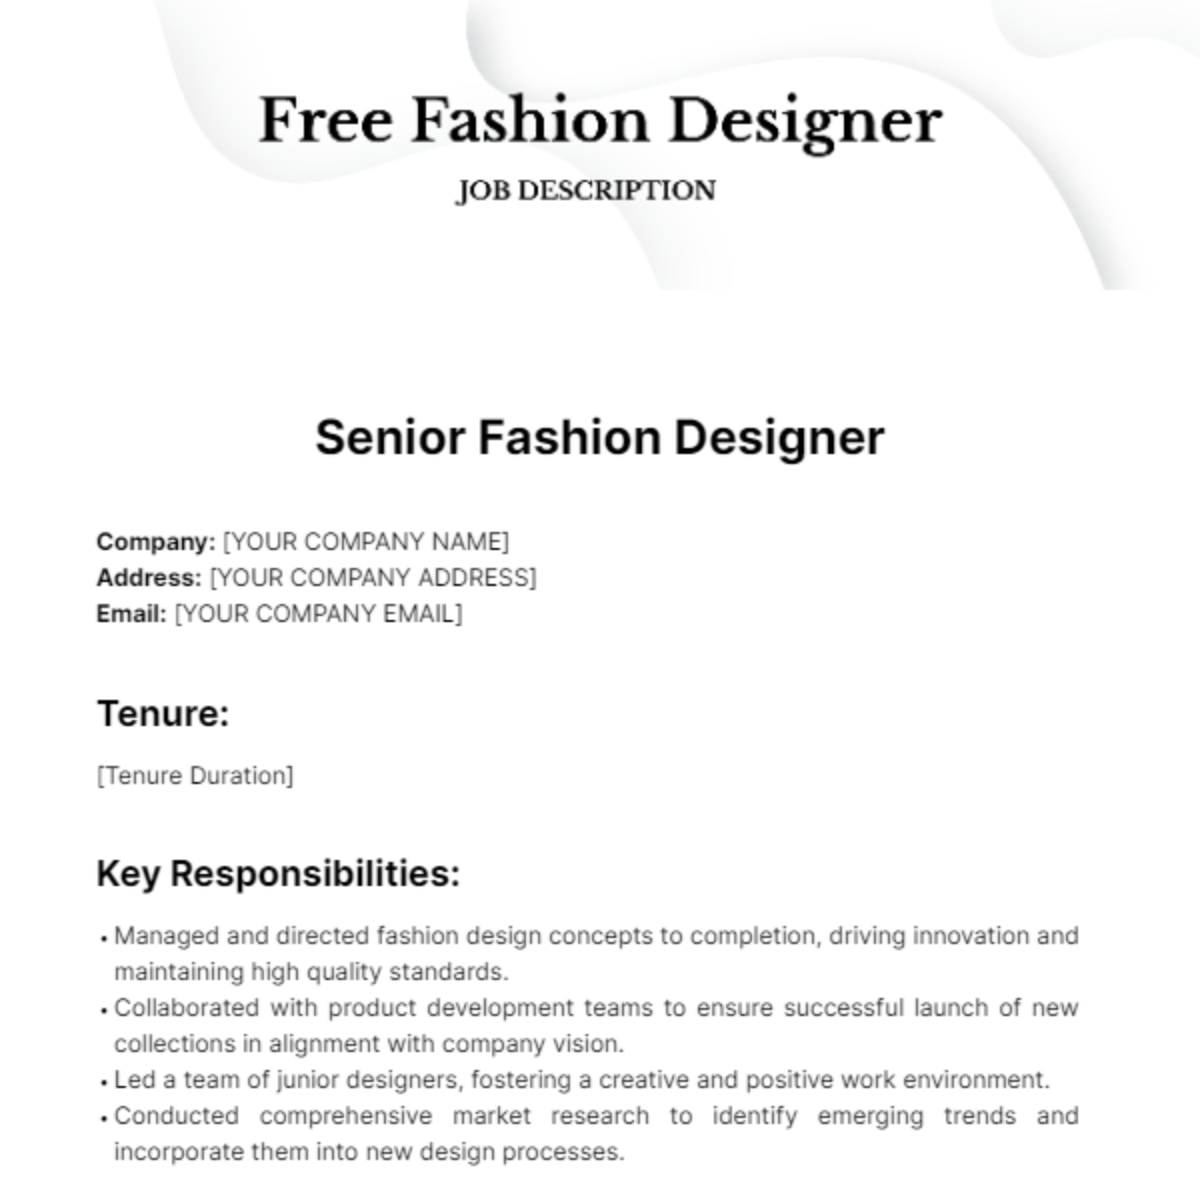 Free Fashion Designer Job Description Resume Template